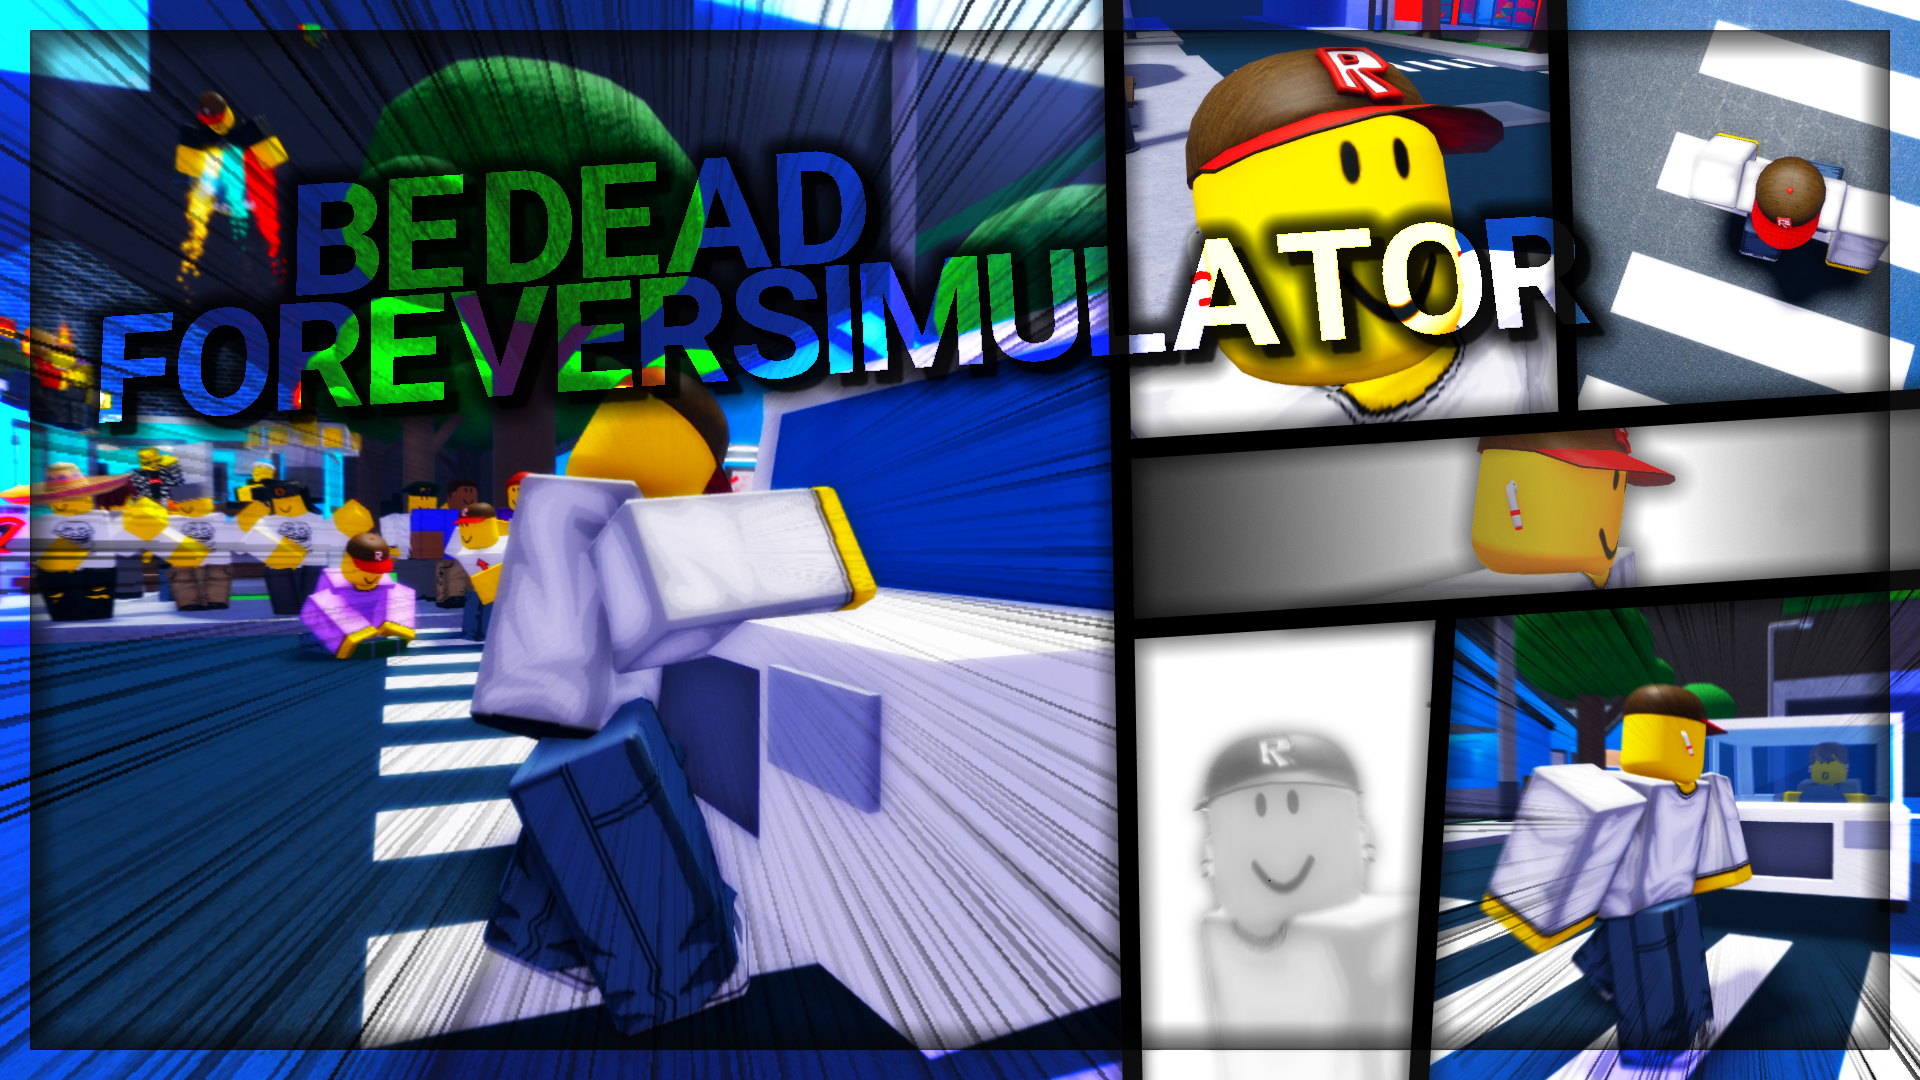 Be Dead Forever Simulator Roblox Wiki Fandom - roblox drop tools on death